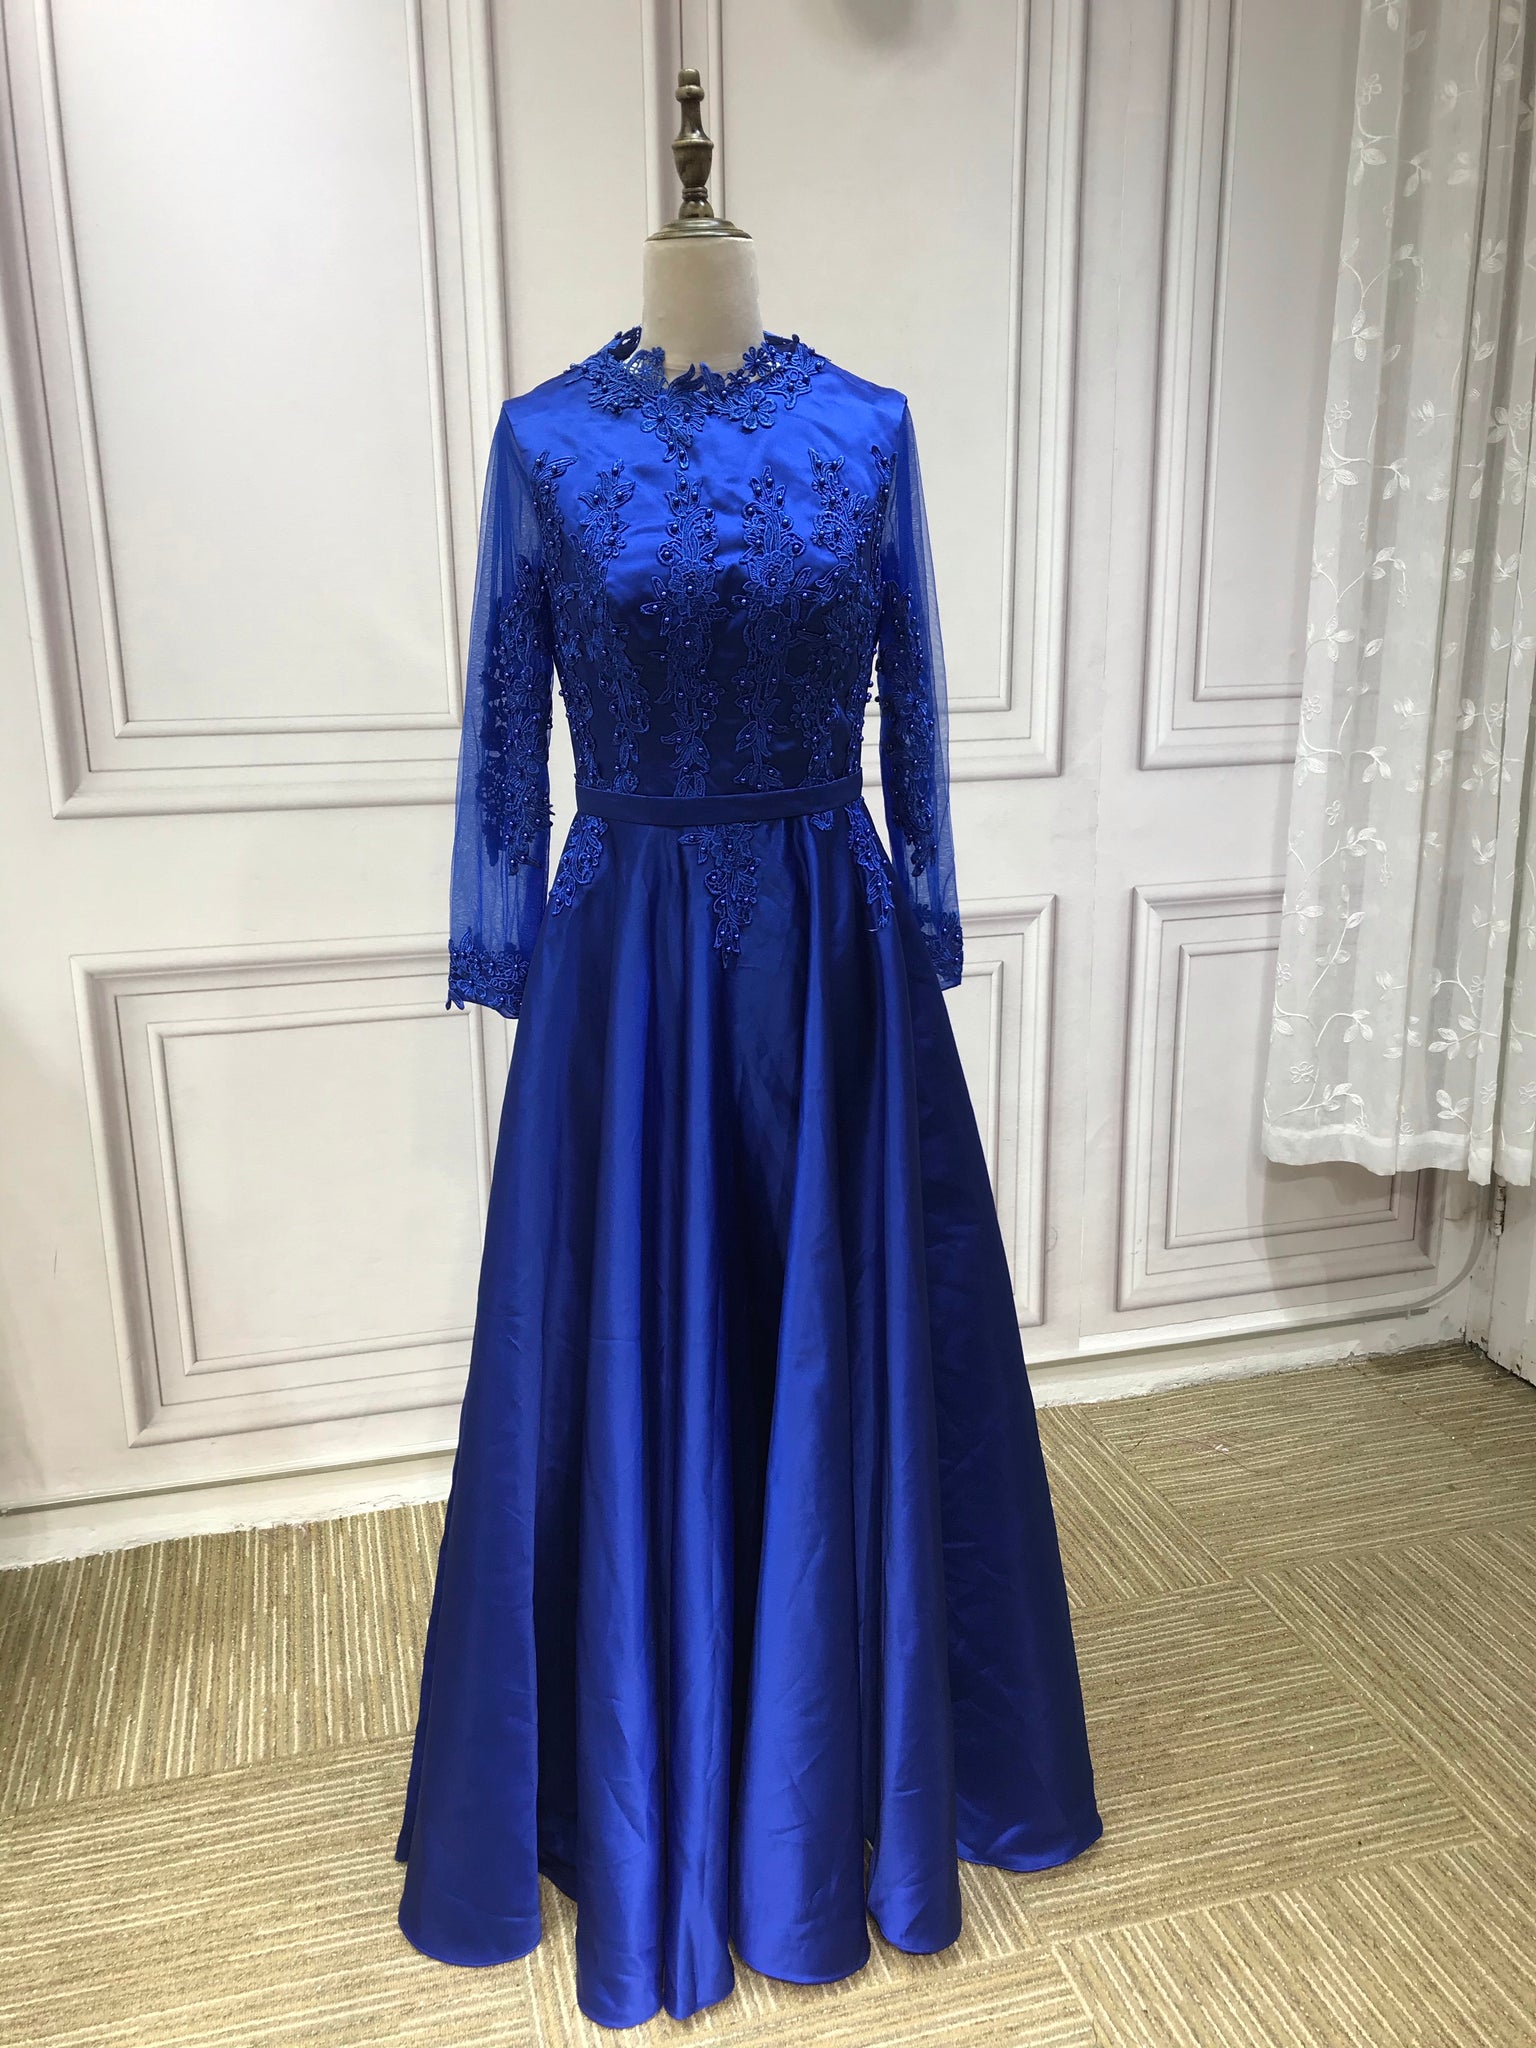 Blue Wedding Dresses: 24 Looks For Bride